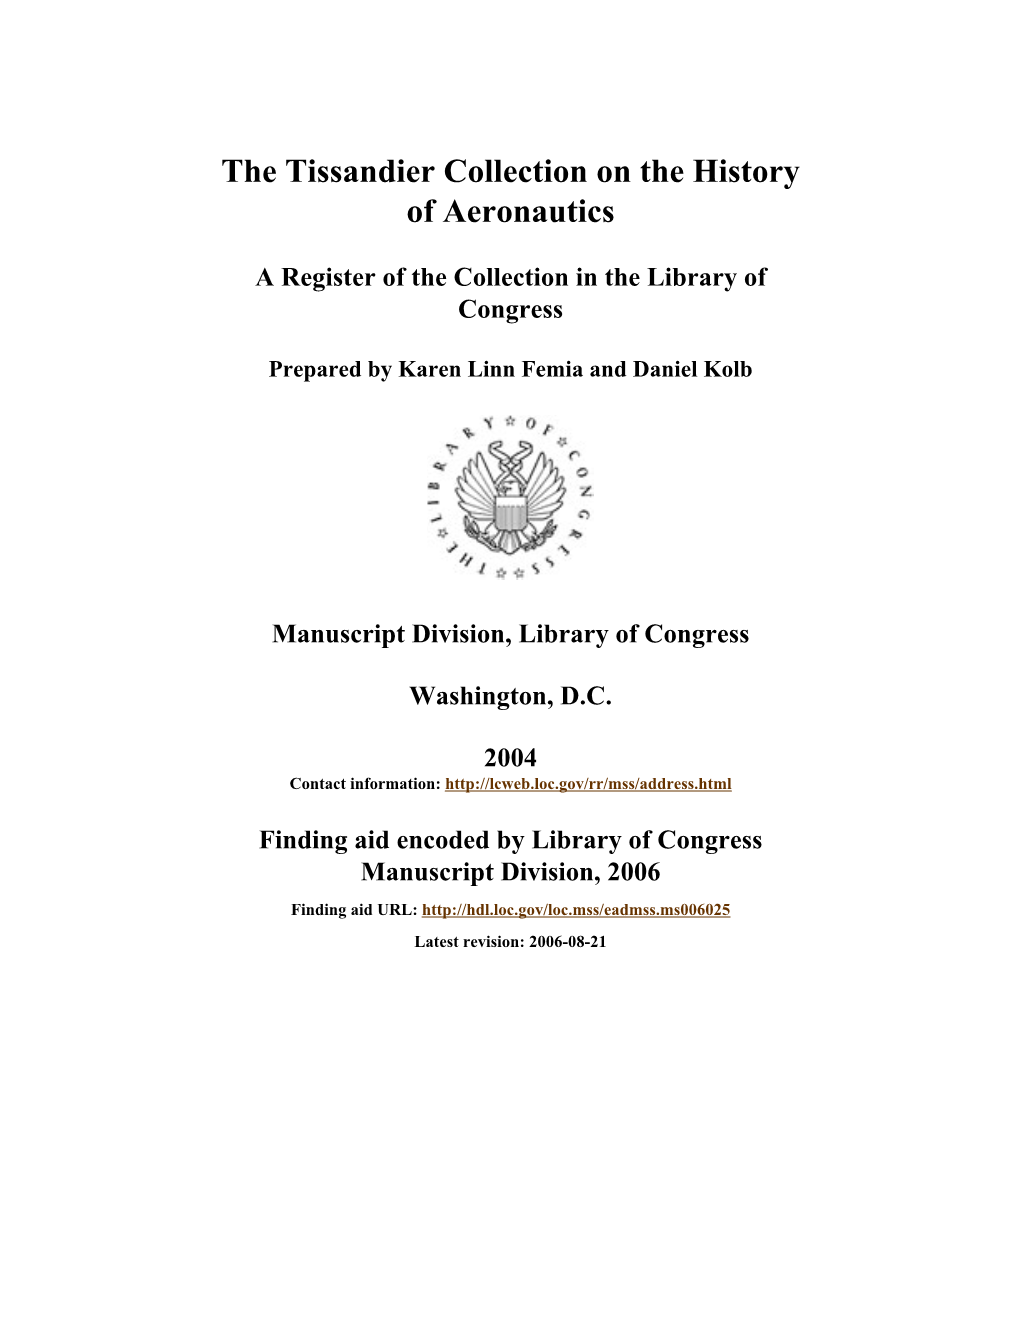 The Tissandier Collection on the History of Aeronautics